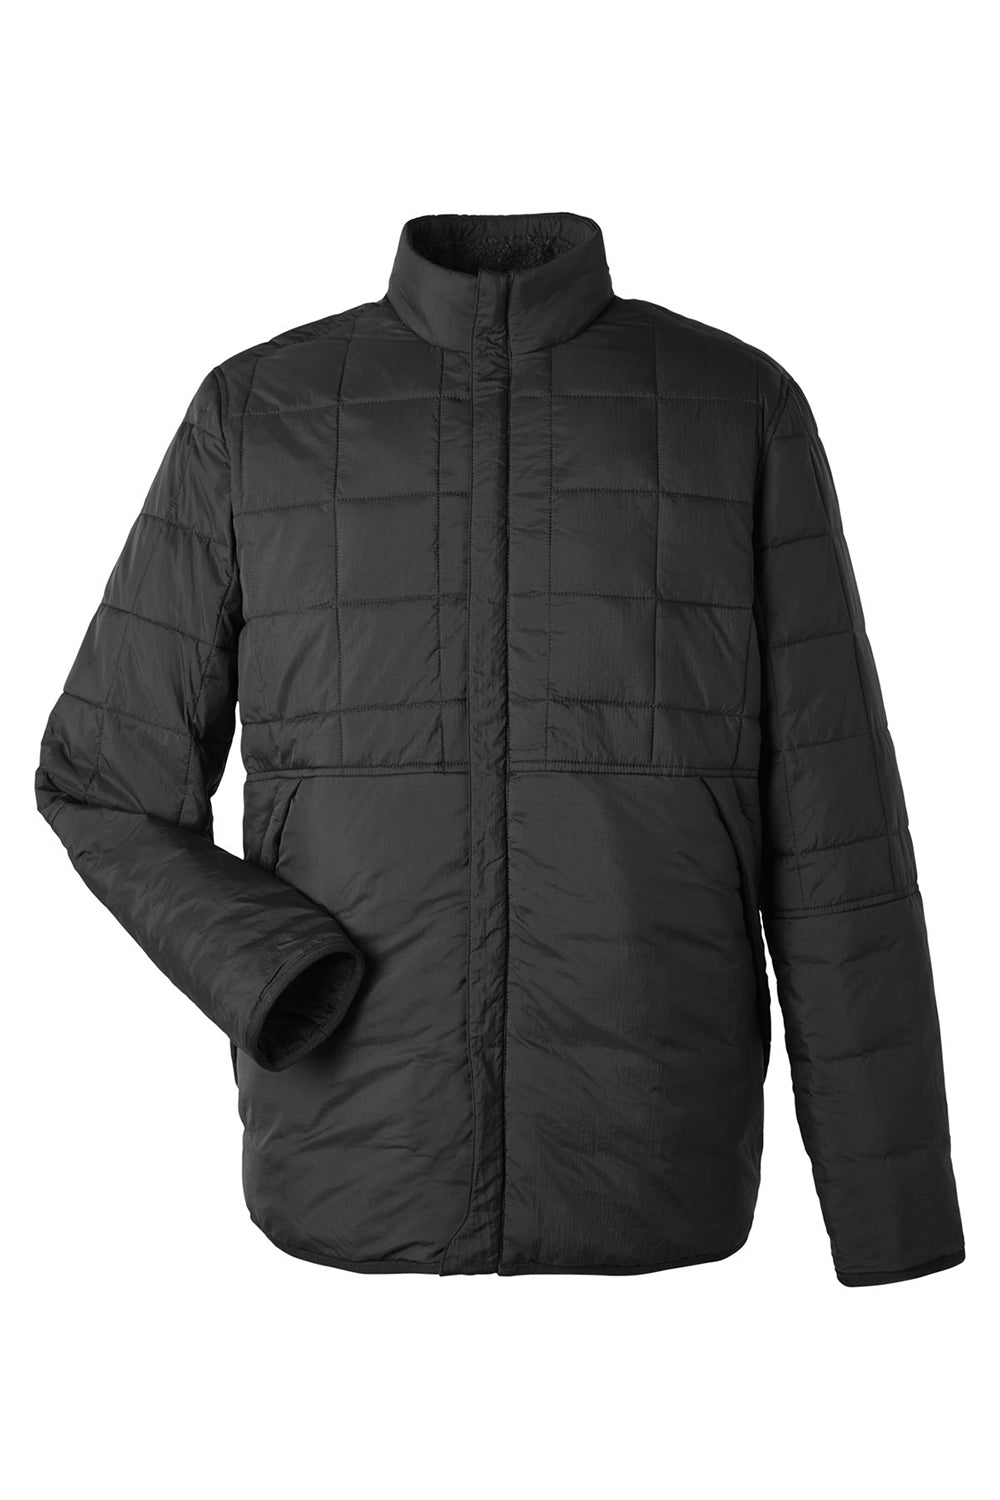 North End NE721 Mens Aura Fleece Lined Full Zip Jacket Black Flat Front